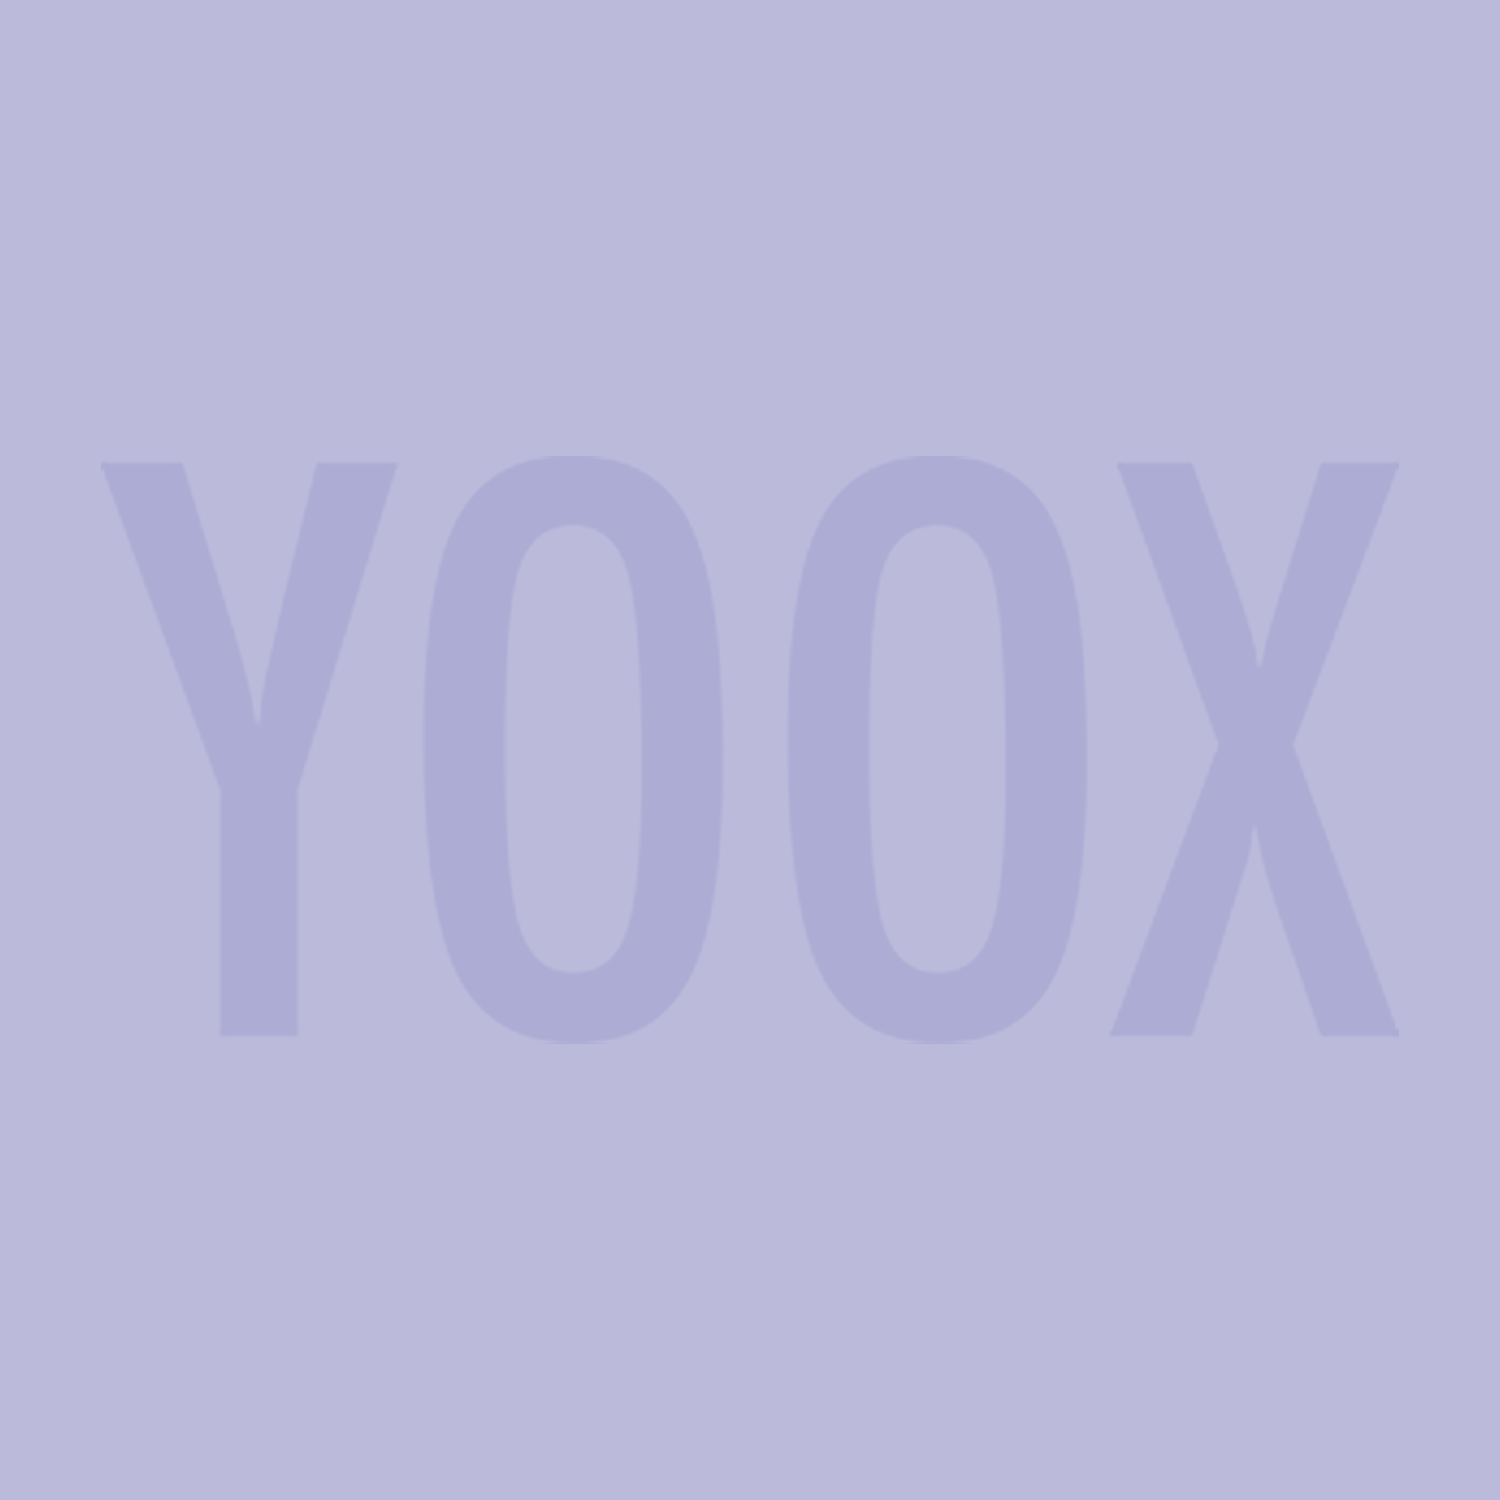 339-yoox-copy-16927992797566.png